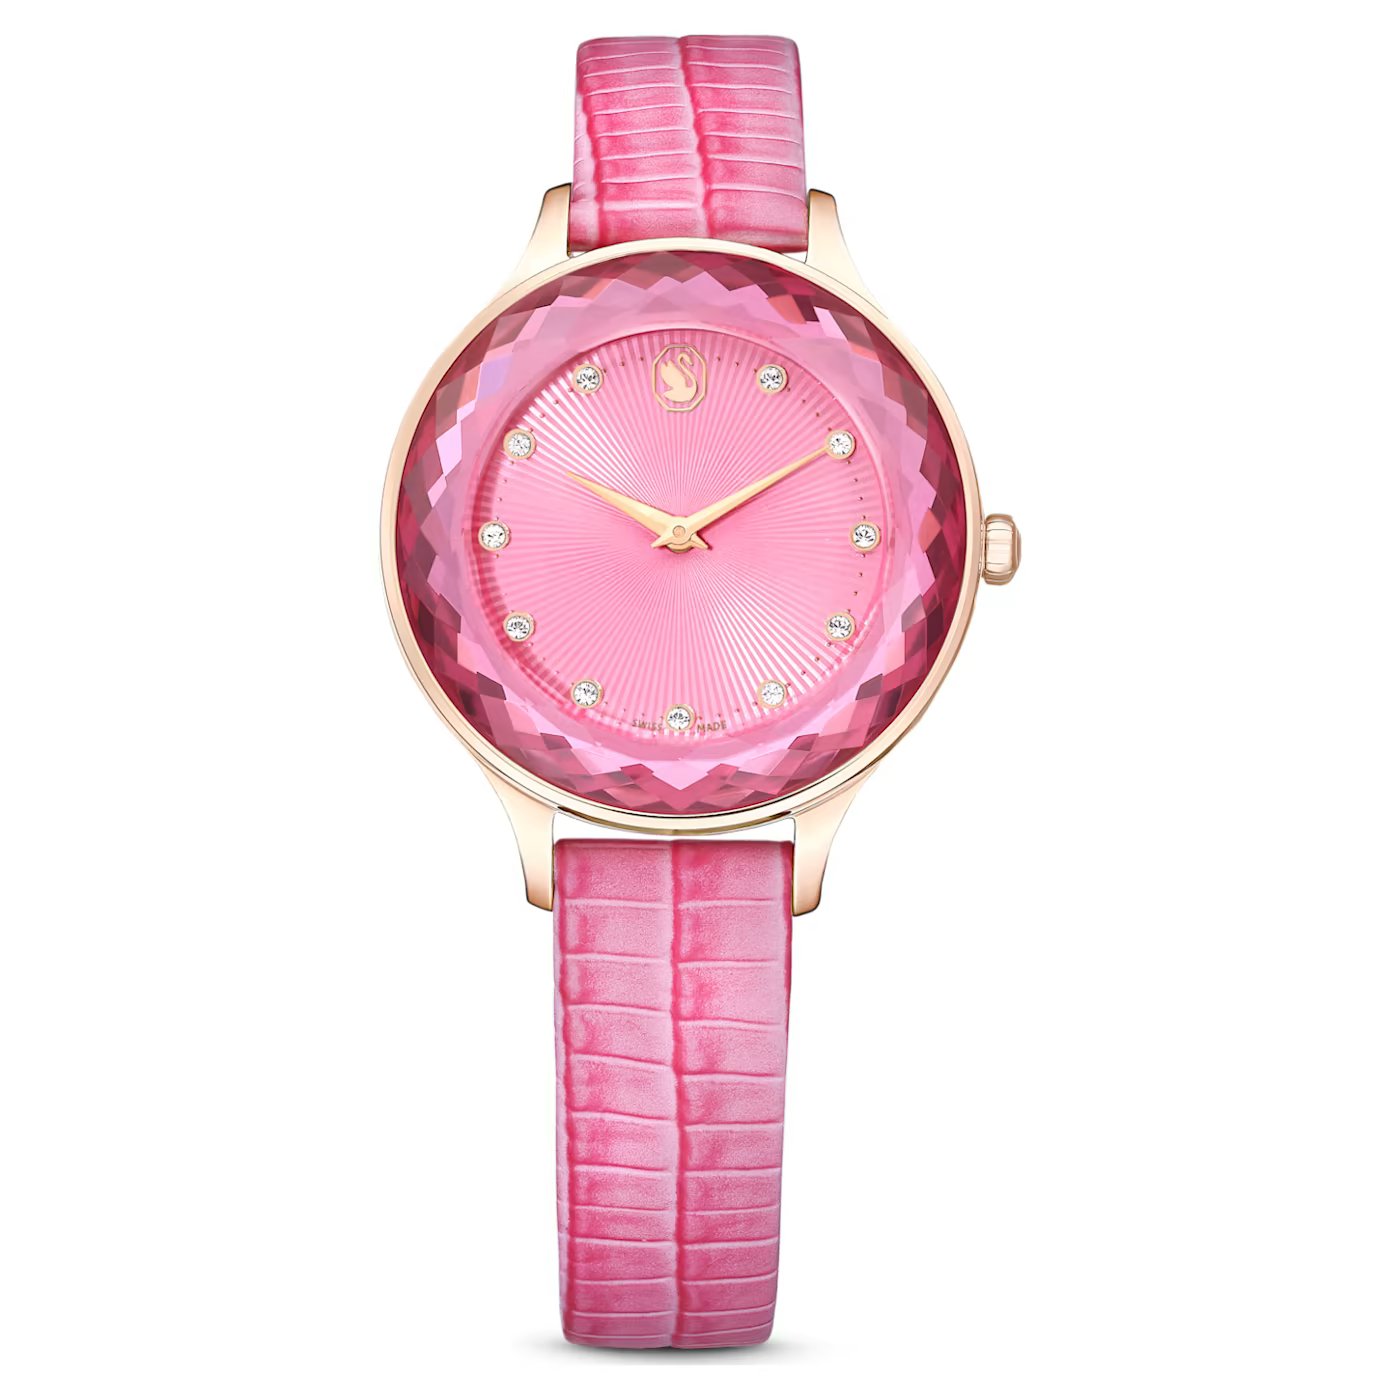 63c9c0fa9e94d_octea-nova-watch--swiss-made--leather-strap--pink--rose-gold-tone-finish-swarovski-5650030.jpg